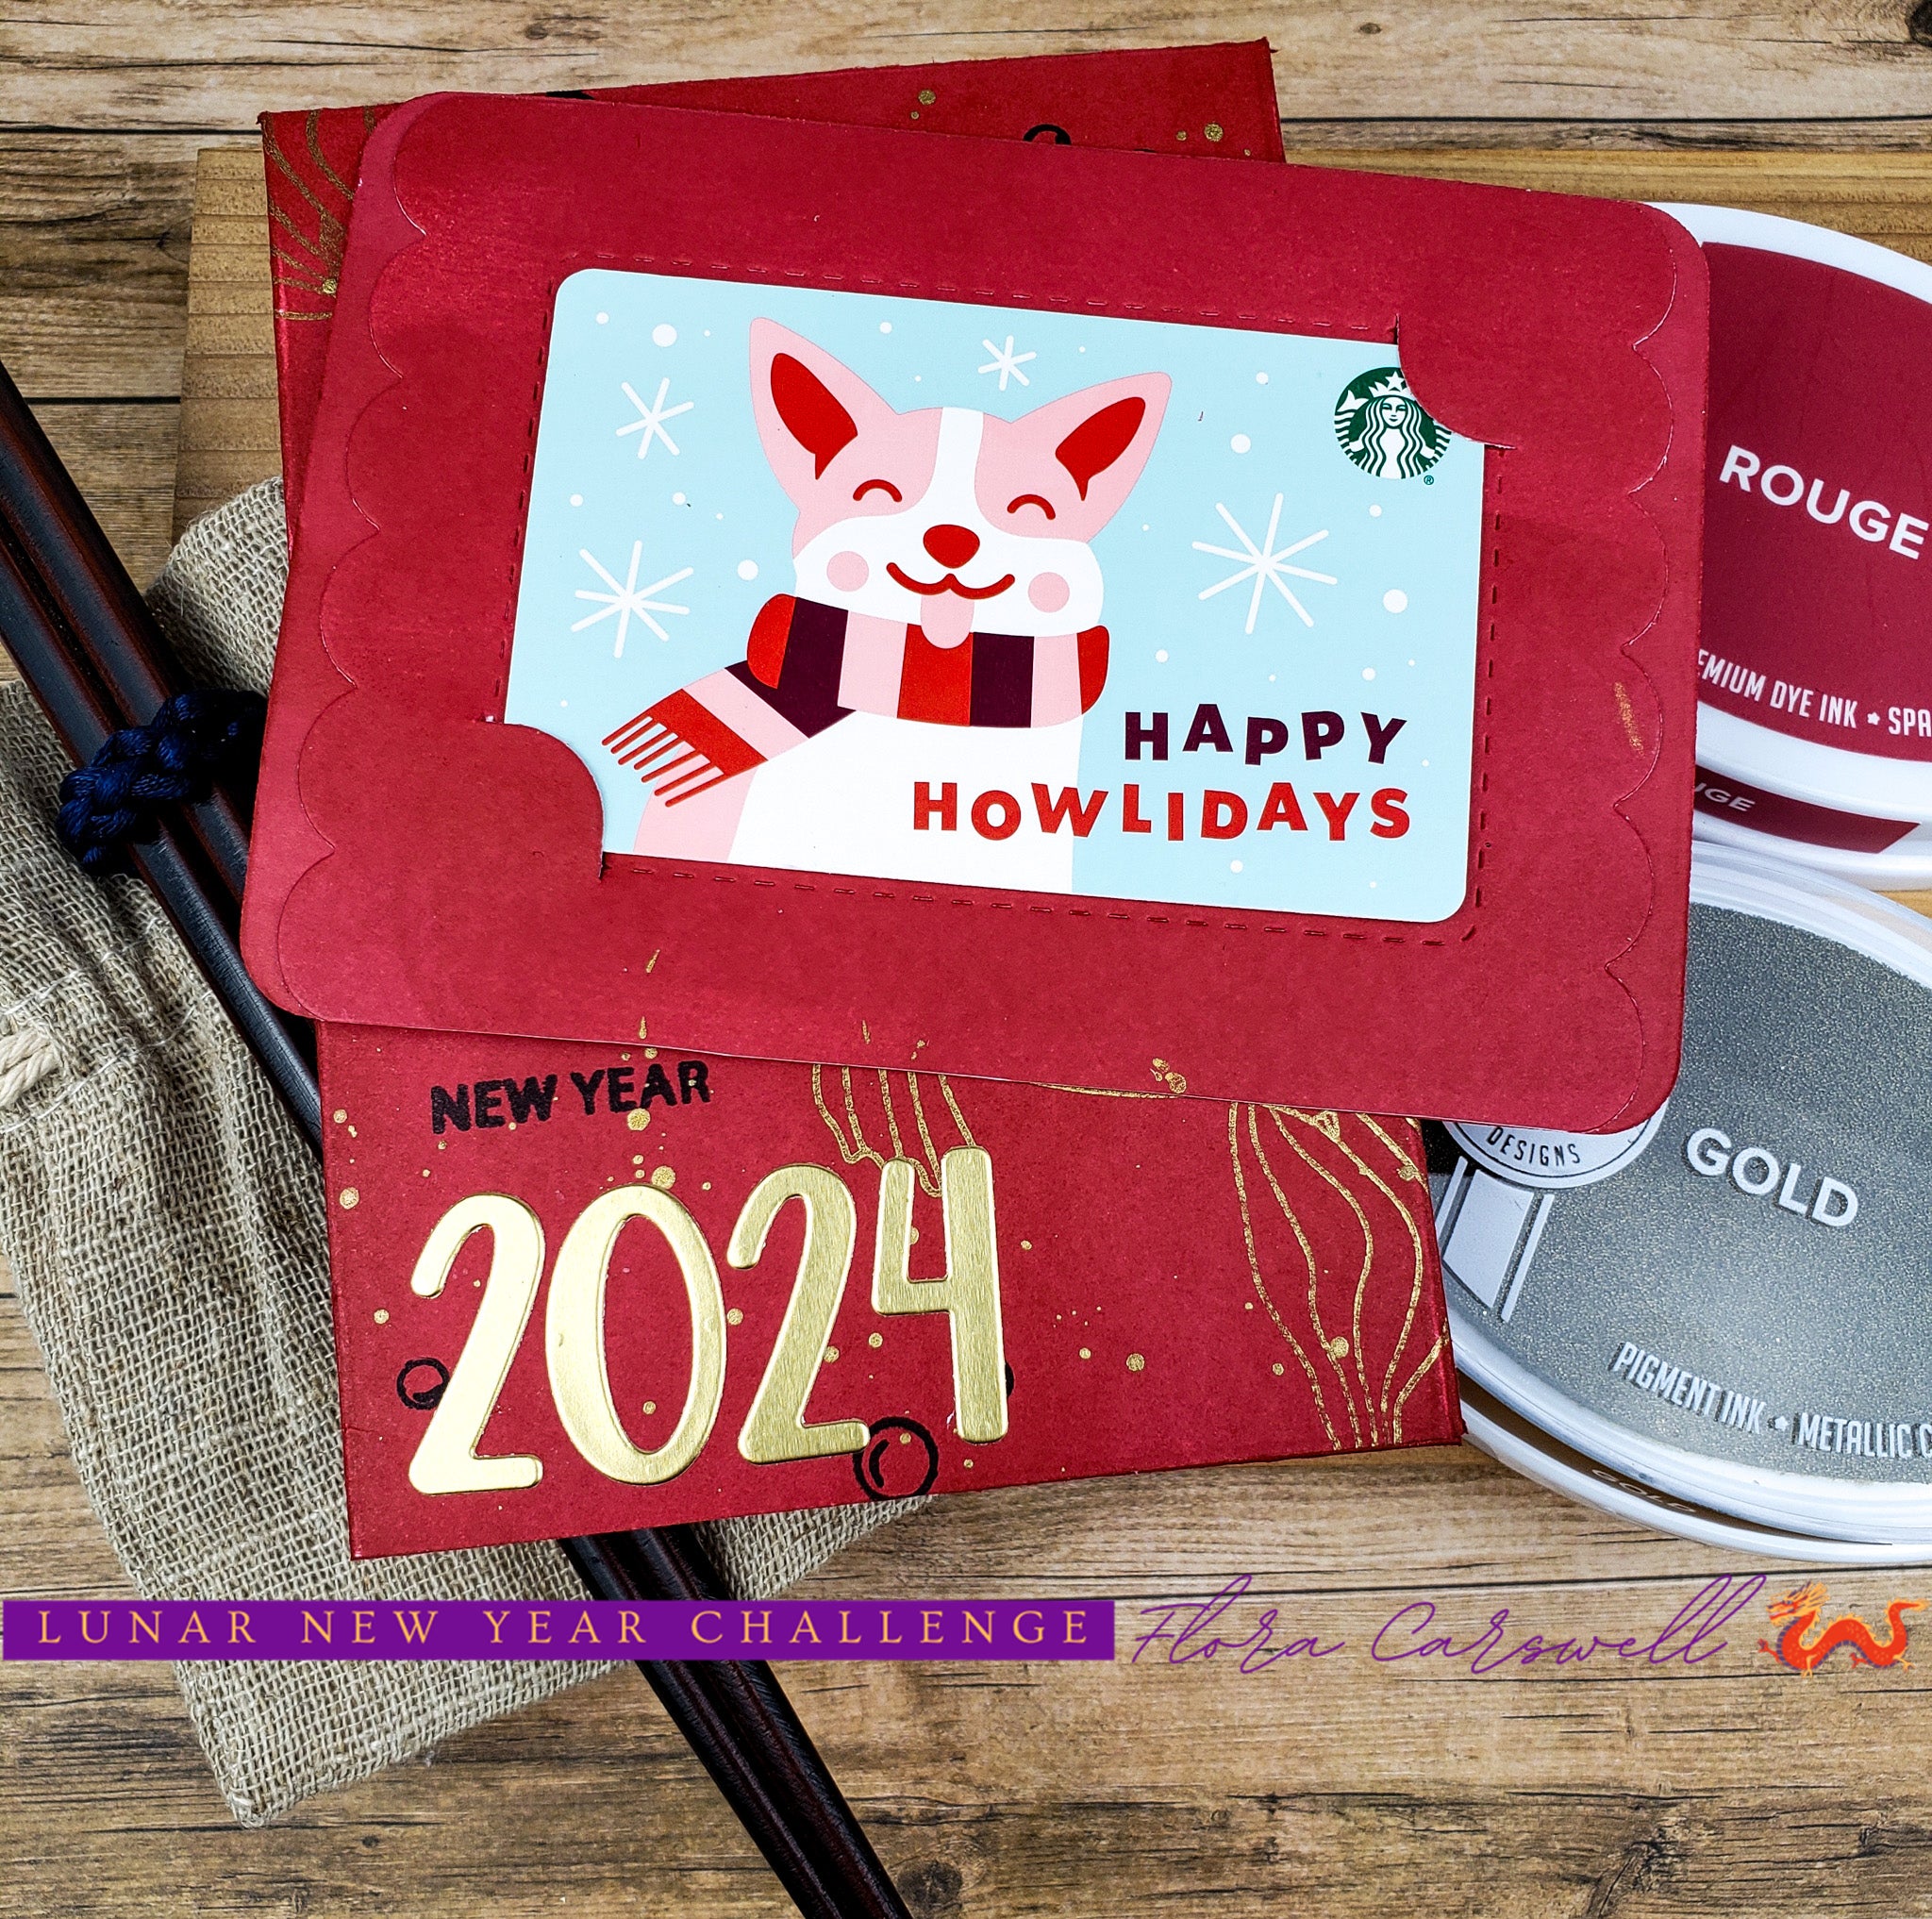 Gift Card Holder makes it so easy for gift giving!